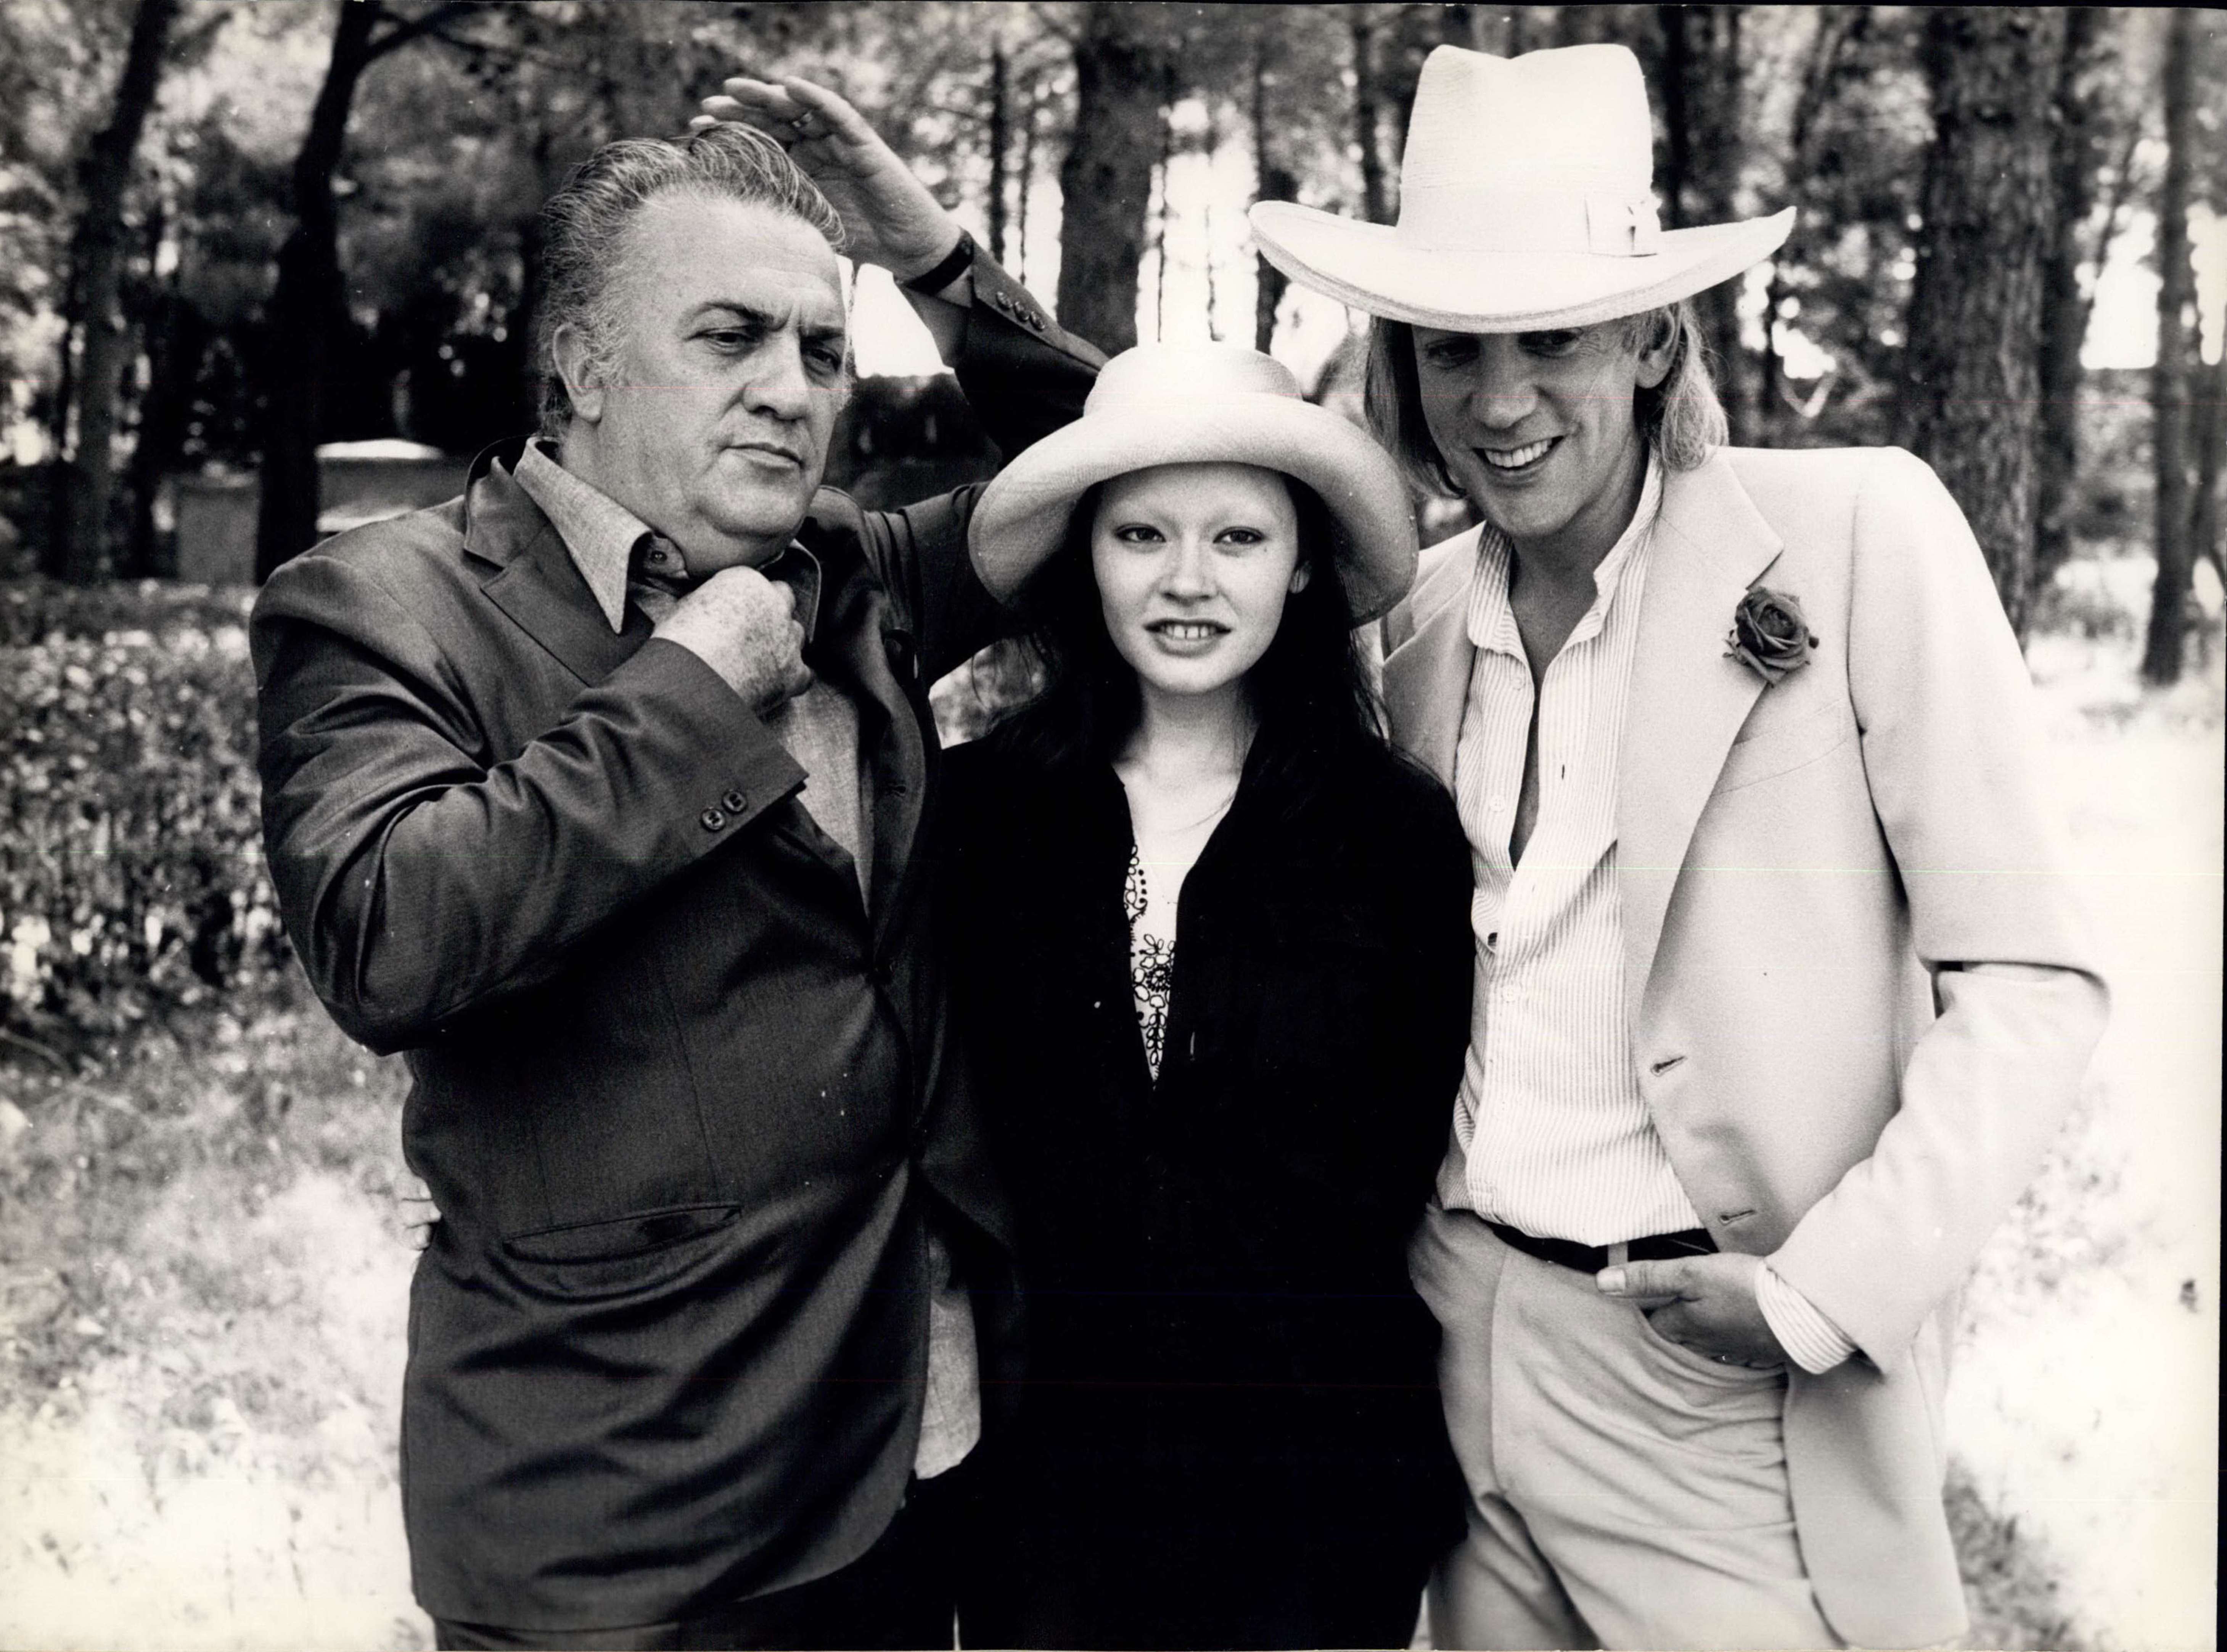 1973 - Director Director Federico Fellini Federico Fellini on film set of Casanova with Margareth Clementi and Donald Sutherland. 1973